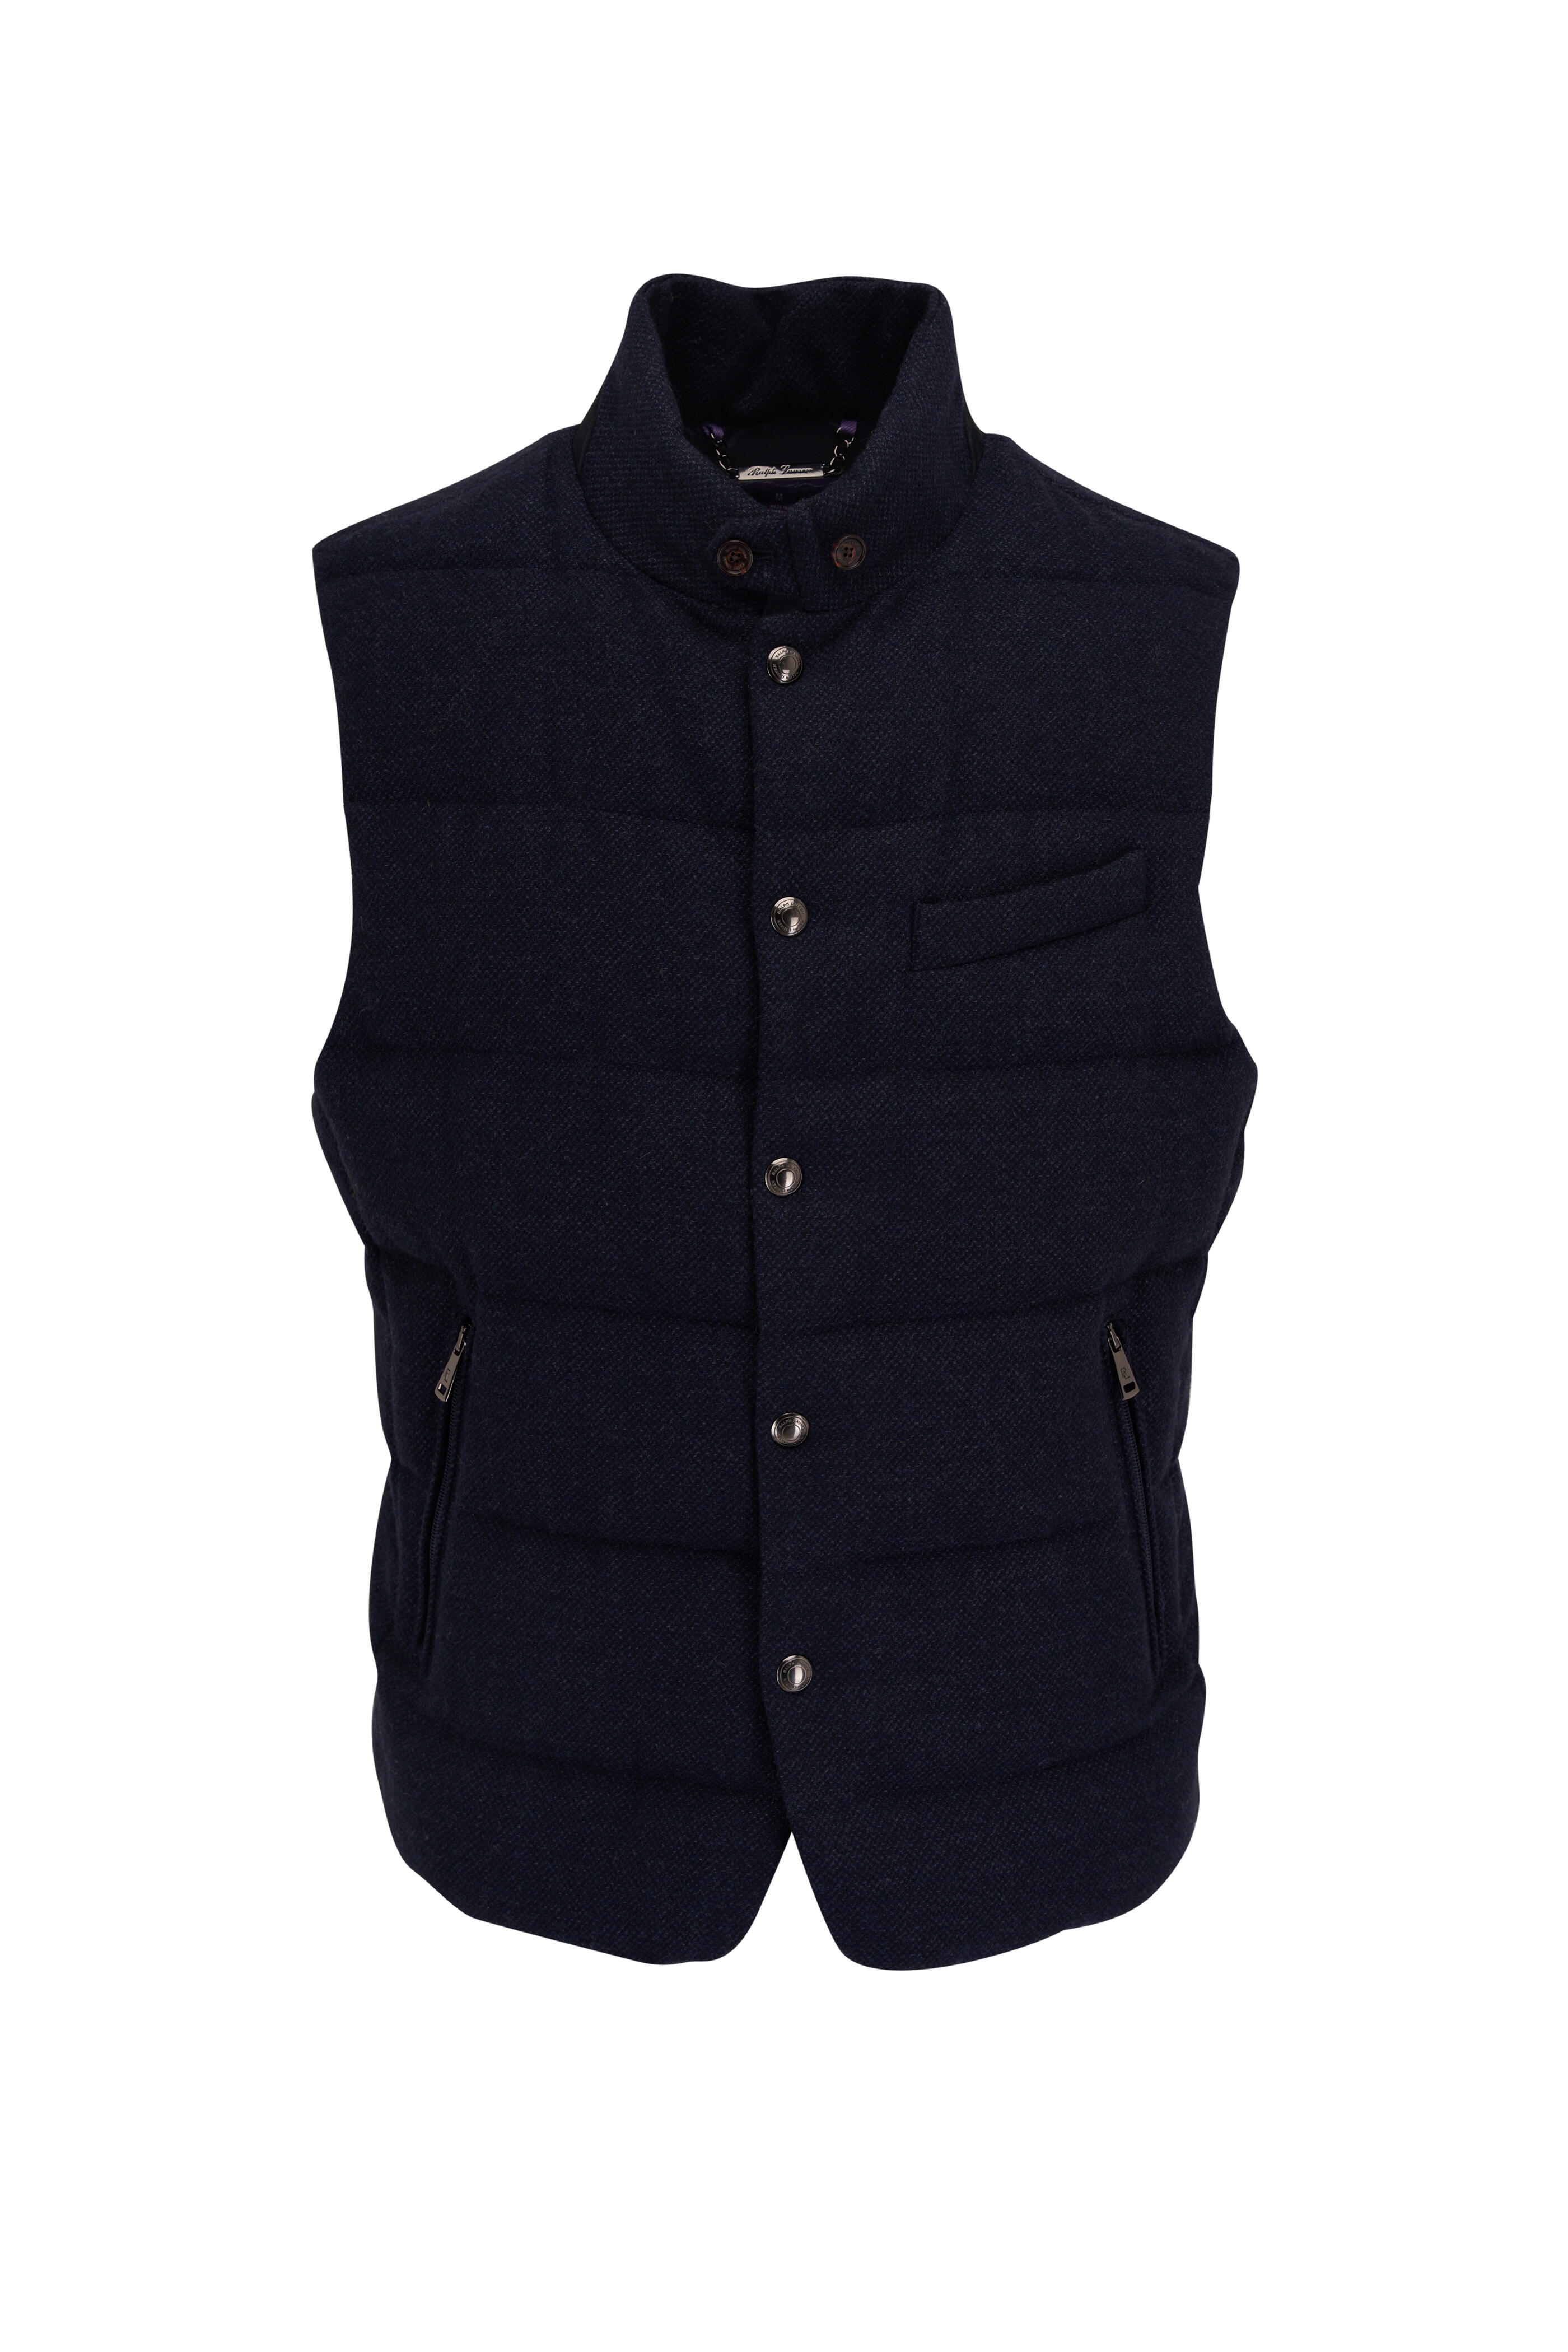 Ralph Lauren Purple Label - Whitewell Navy Wool, Linen & Silk Down Vest